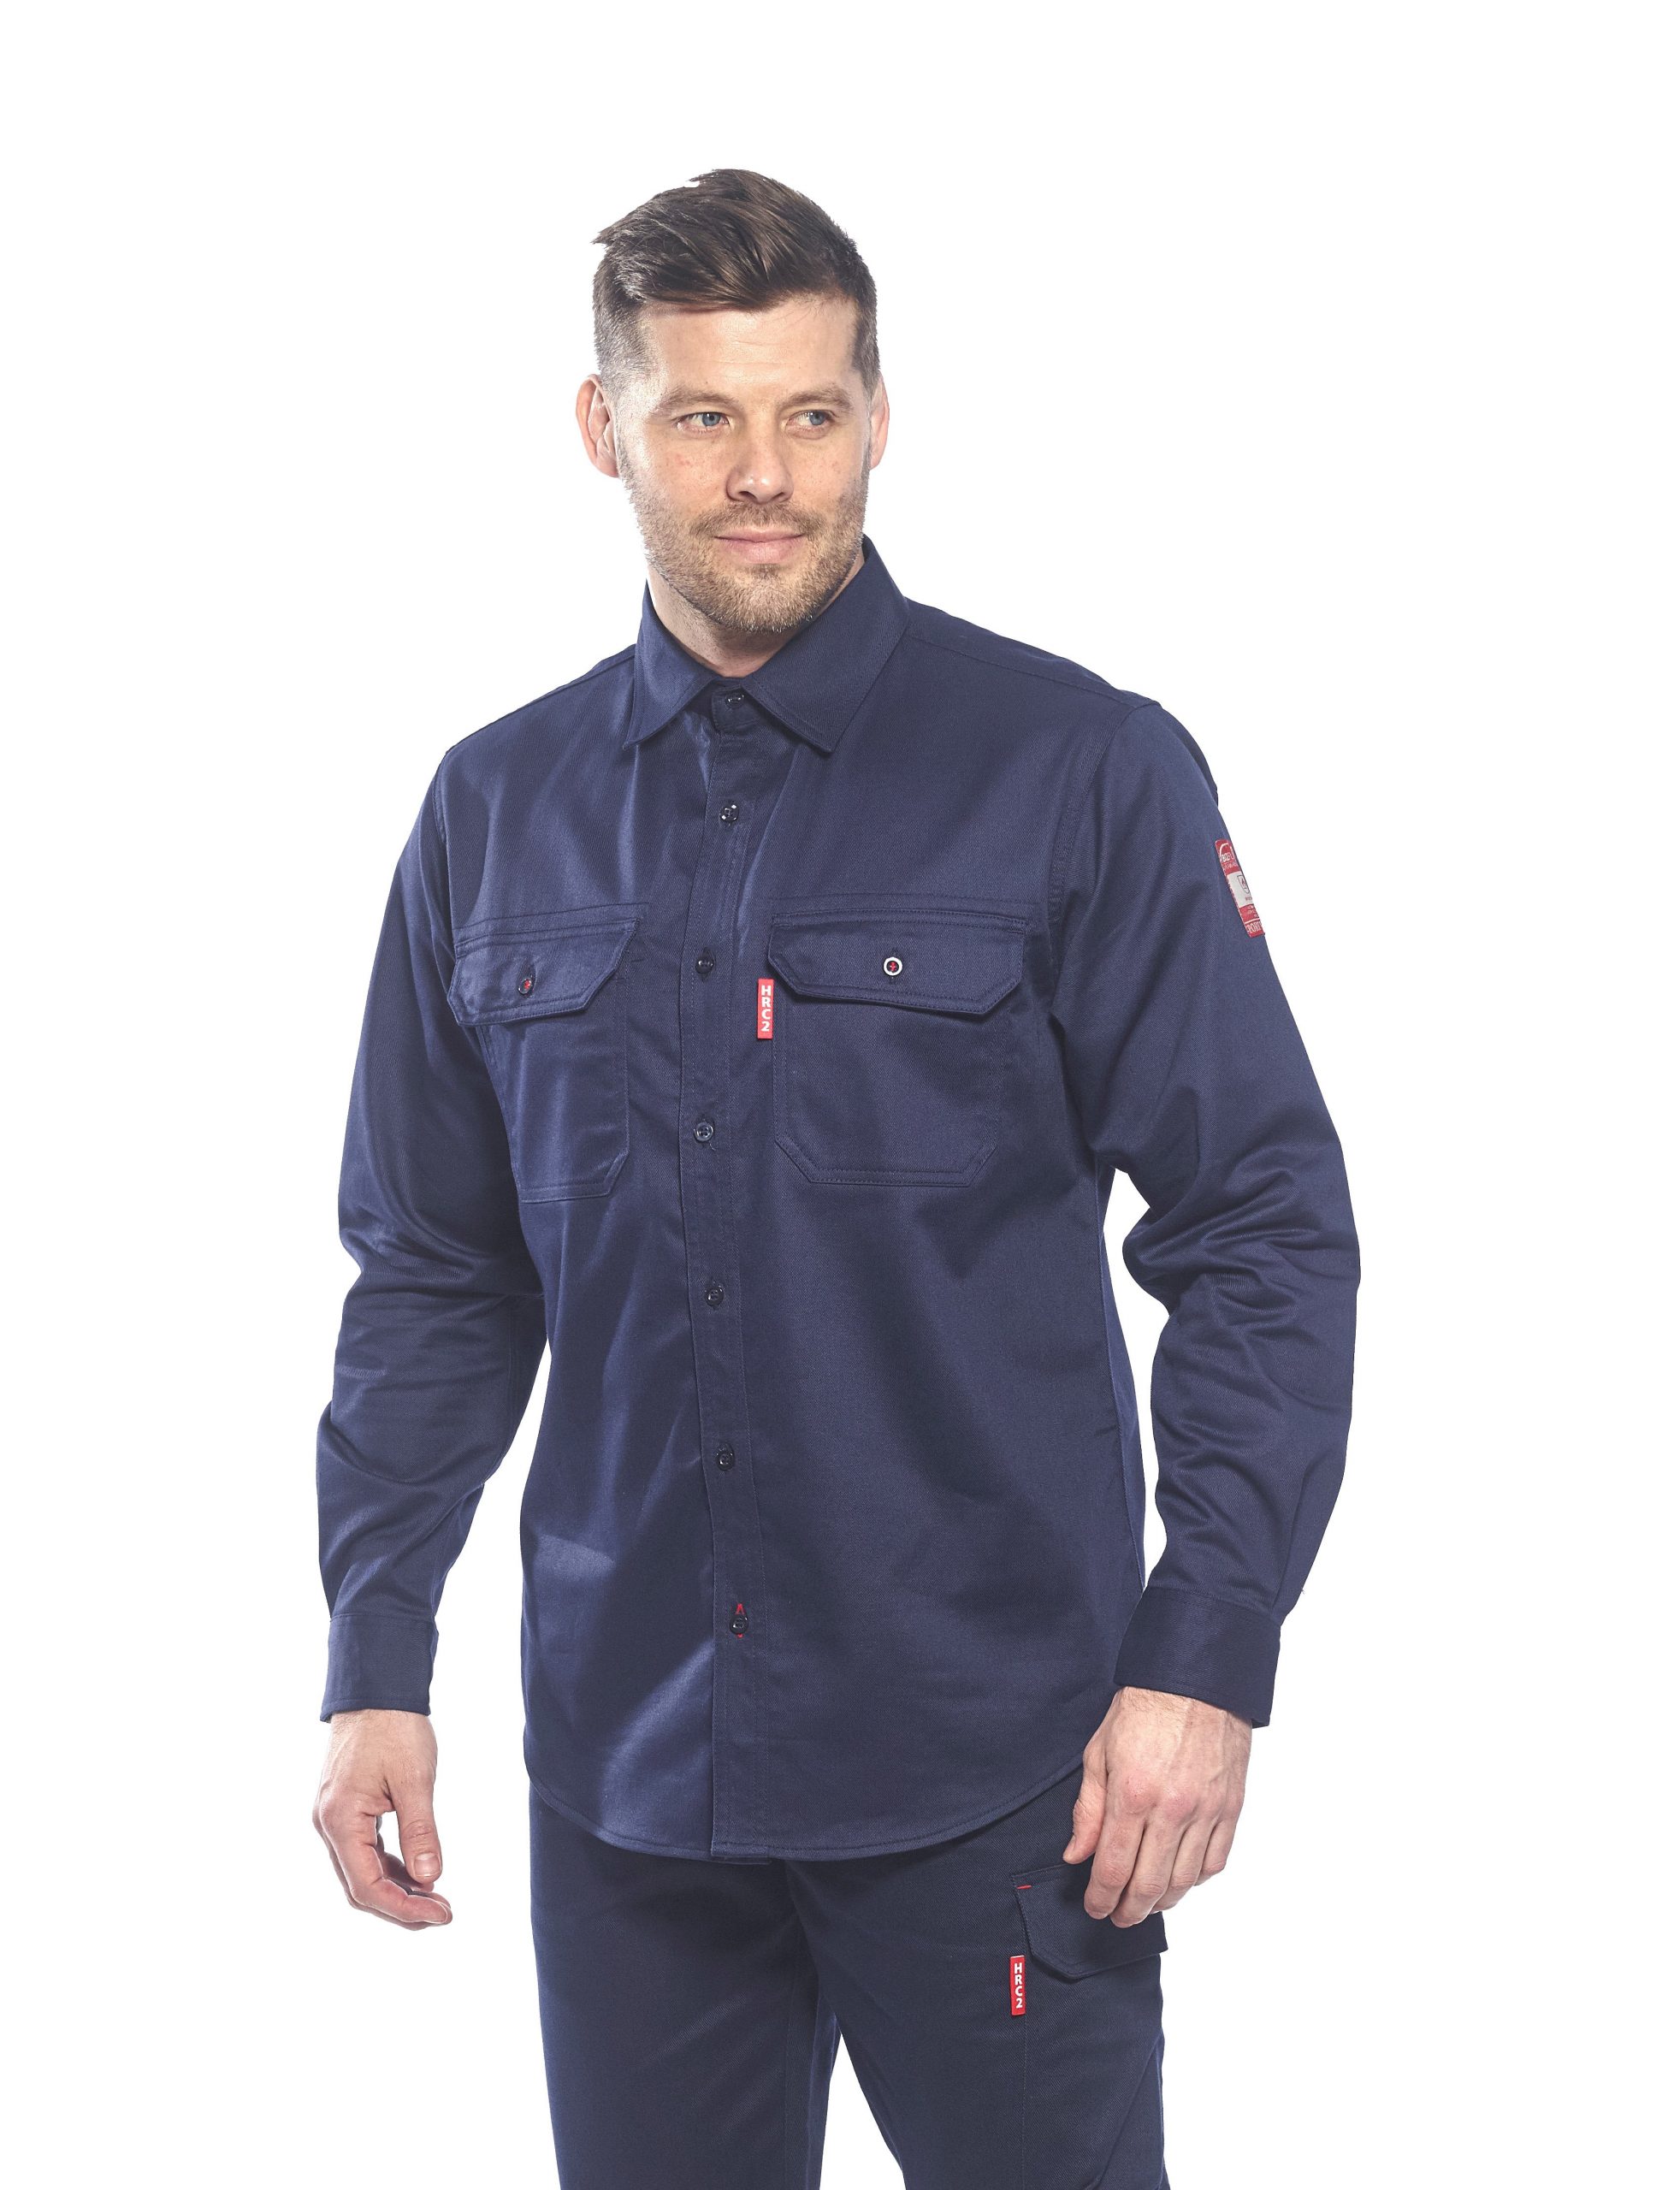 Portwest Workwear Bizflame 88/12 Flame Retardant Shirt FR89